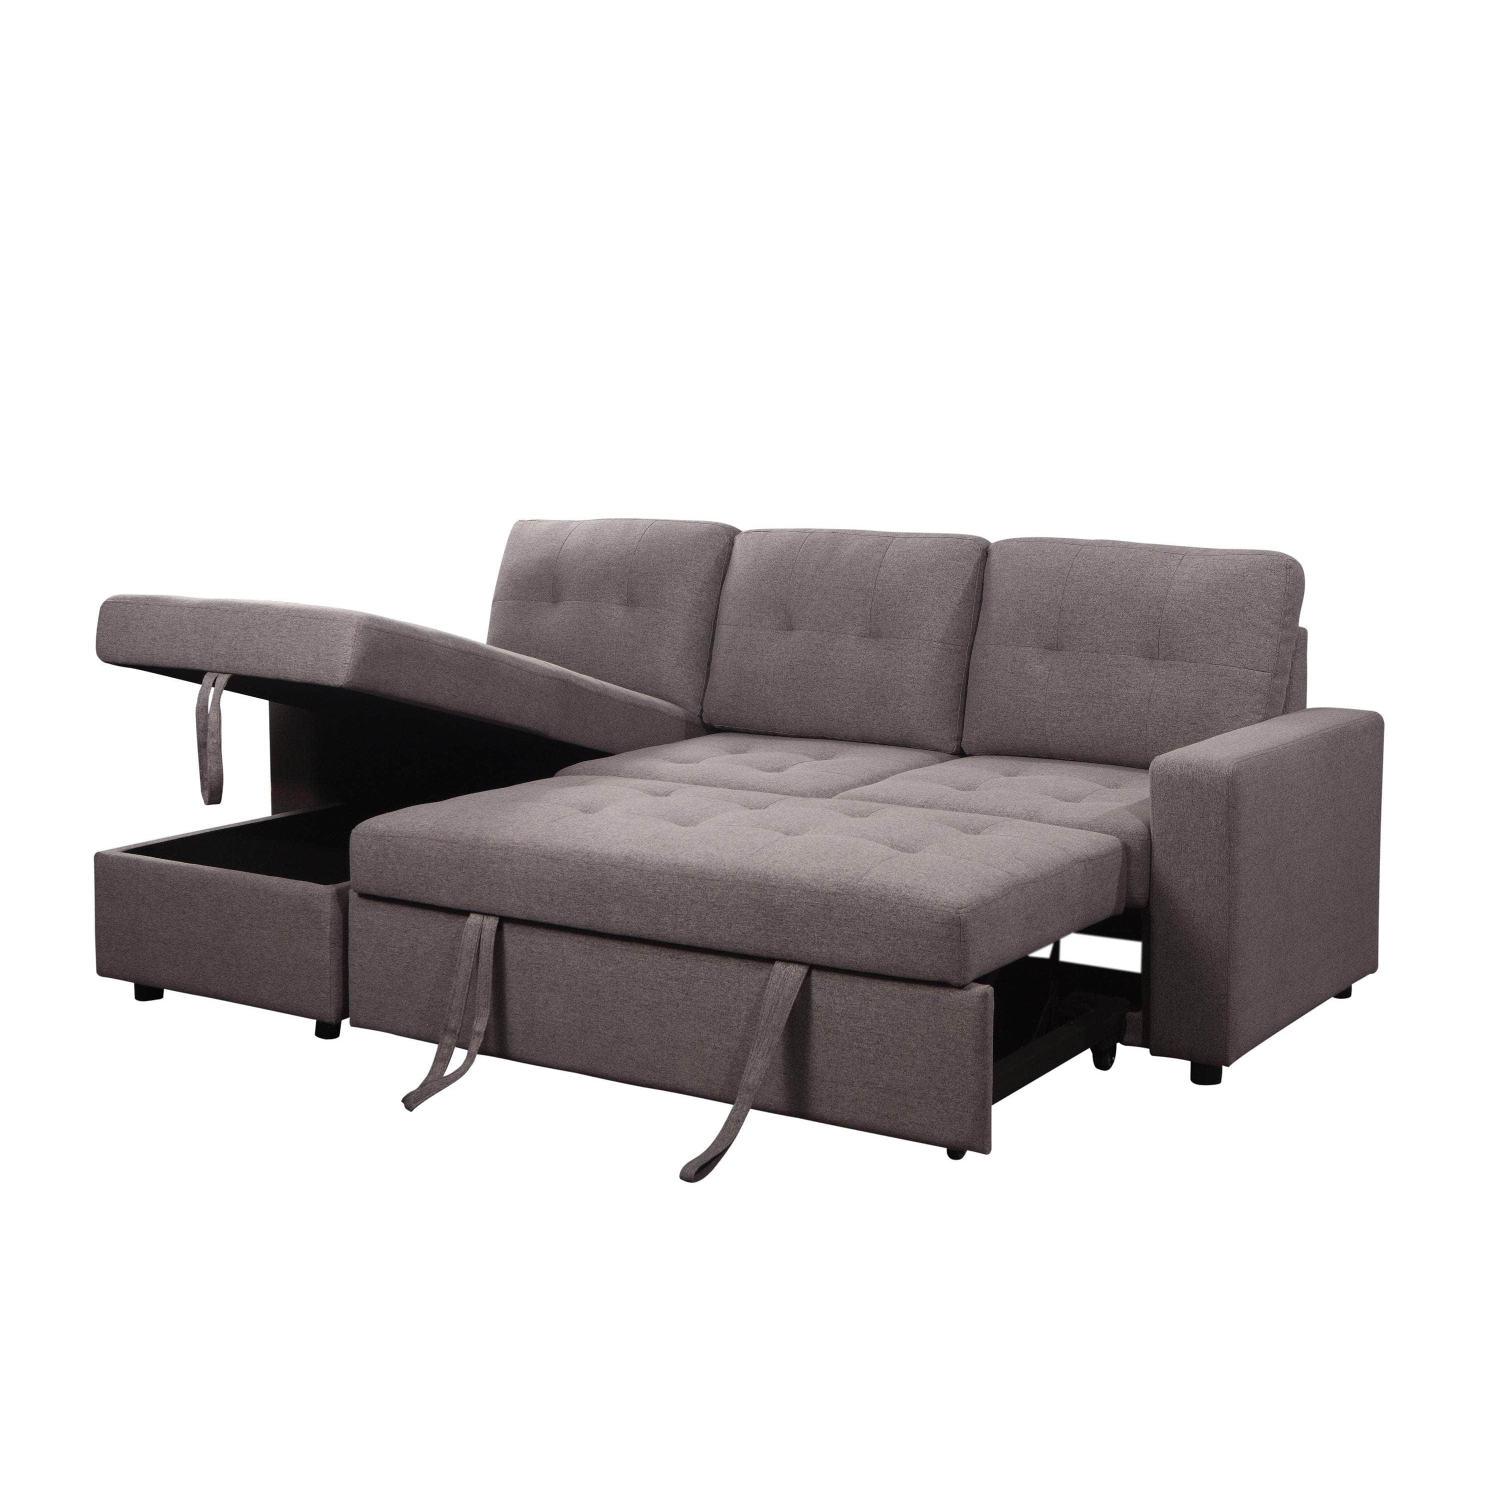 Urban Cali Malibu Sleeper Sectional Sofa Bed with Left Storage Chaise in Solis Dark Grey